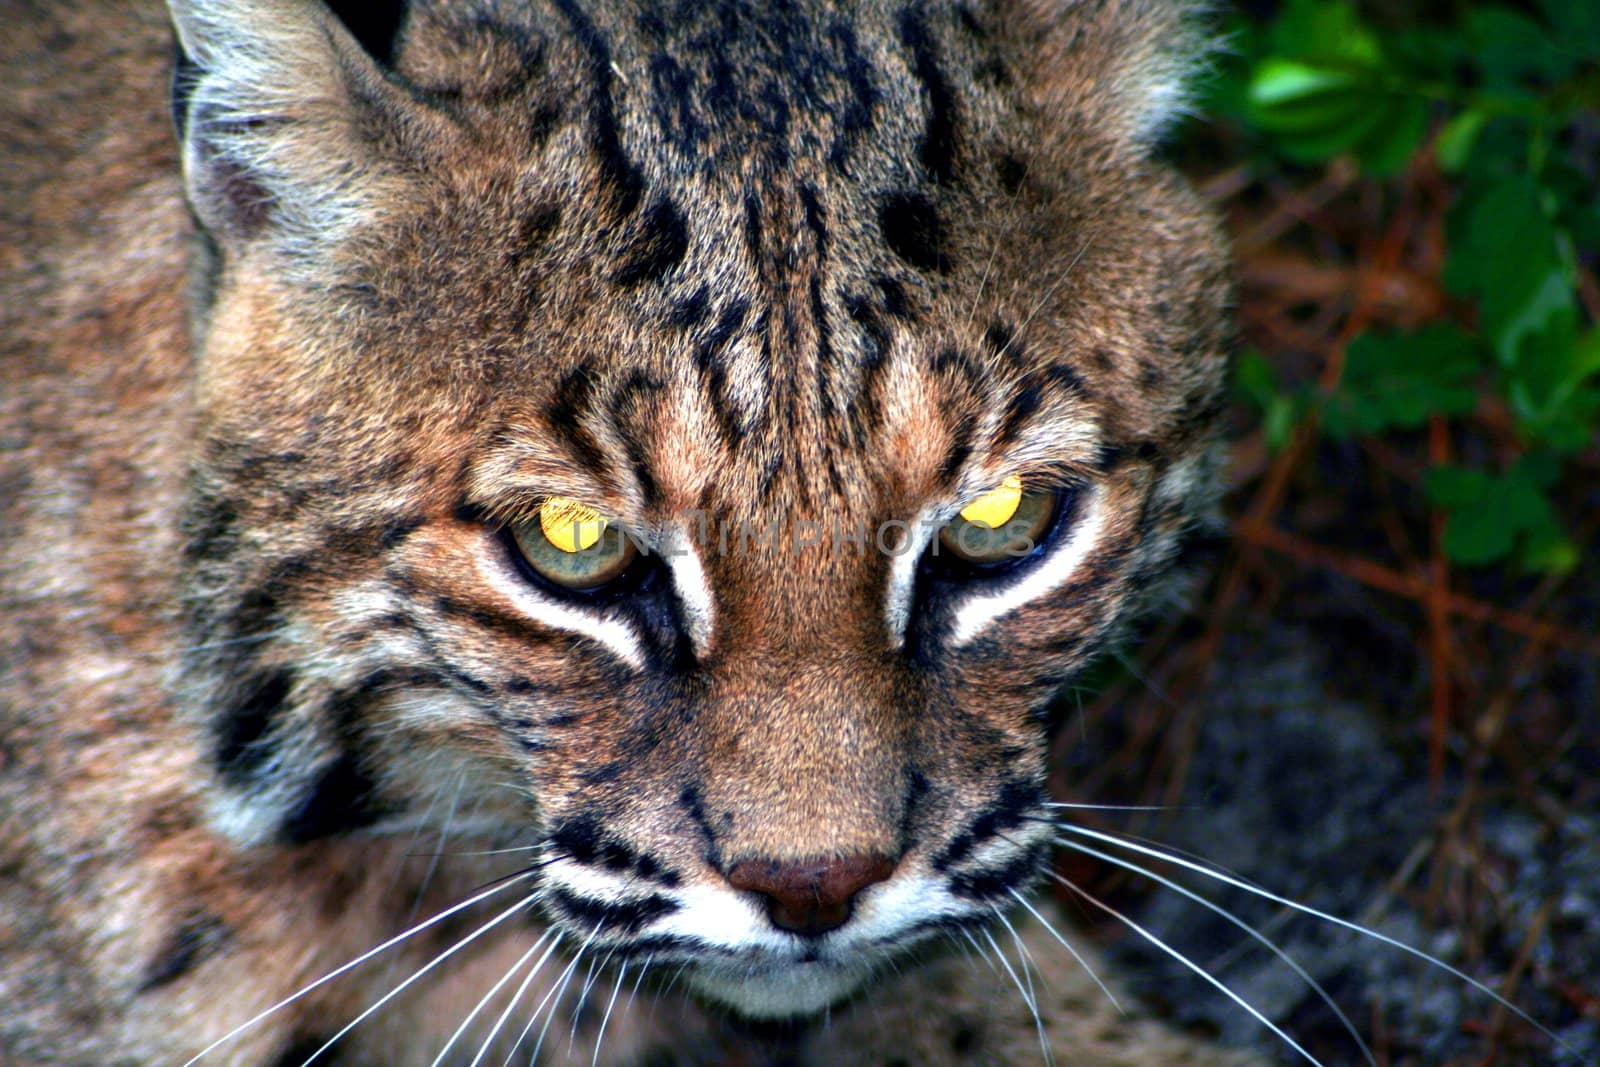 Close up of a bobcat, eyes glowing yellow